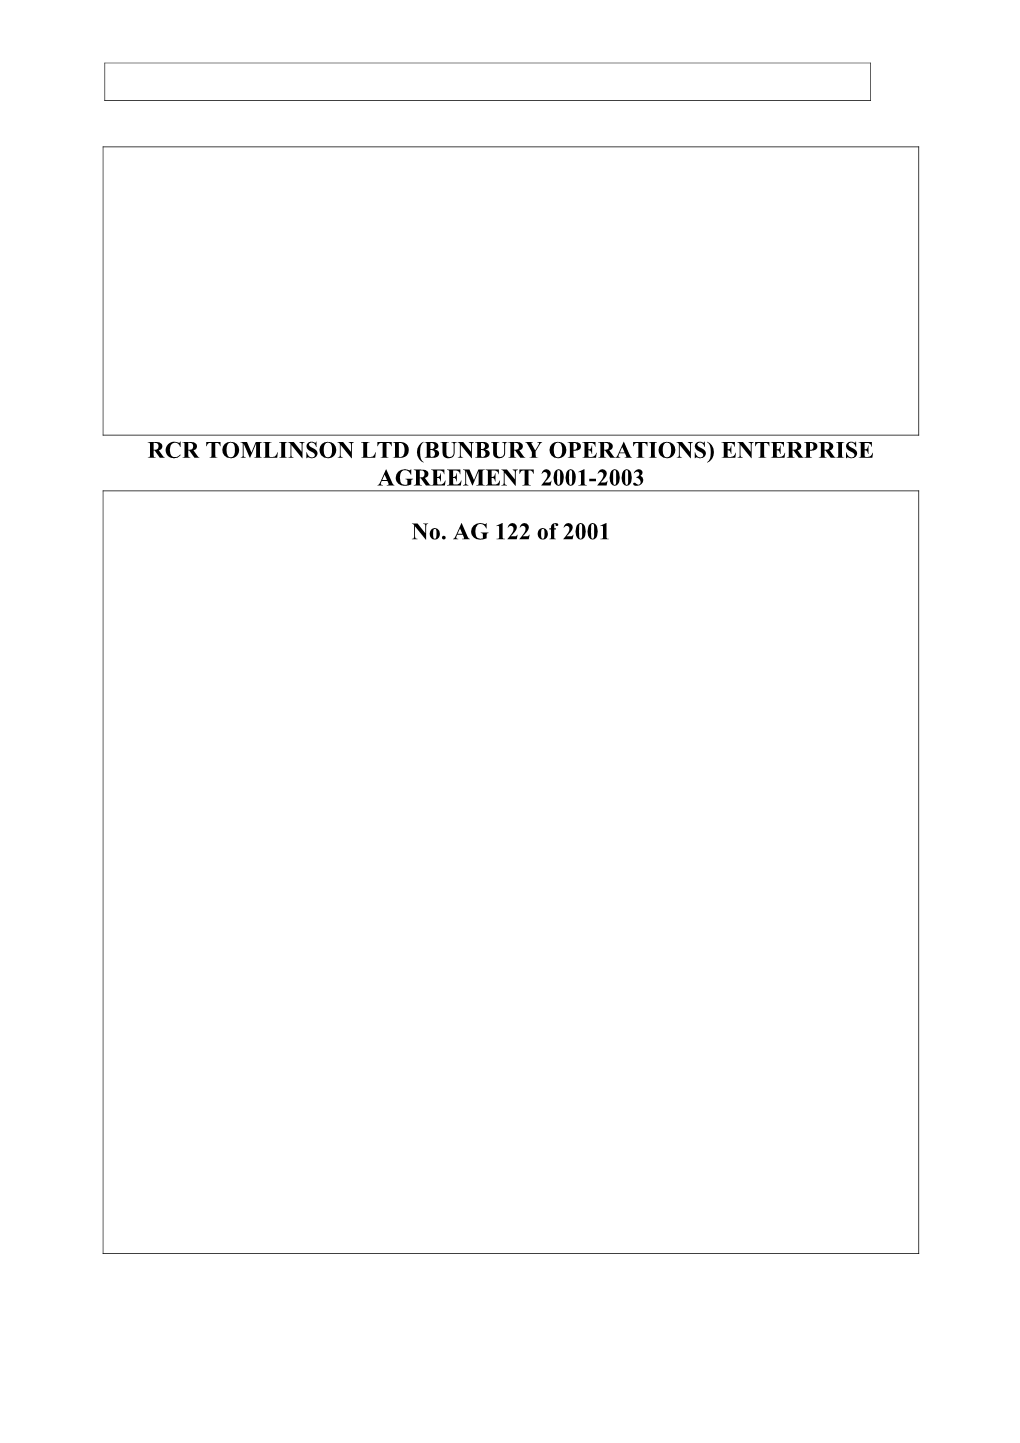 RCR Tomlinson Ltd (Bunbury Operations) Enterprise Agreement 2001-2003